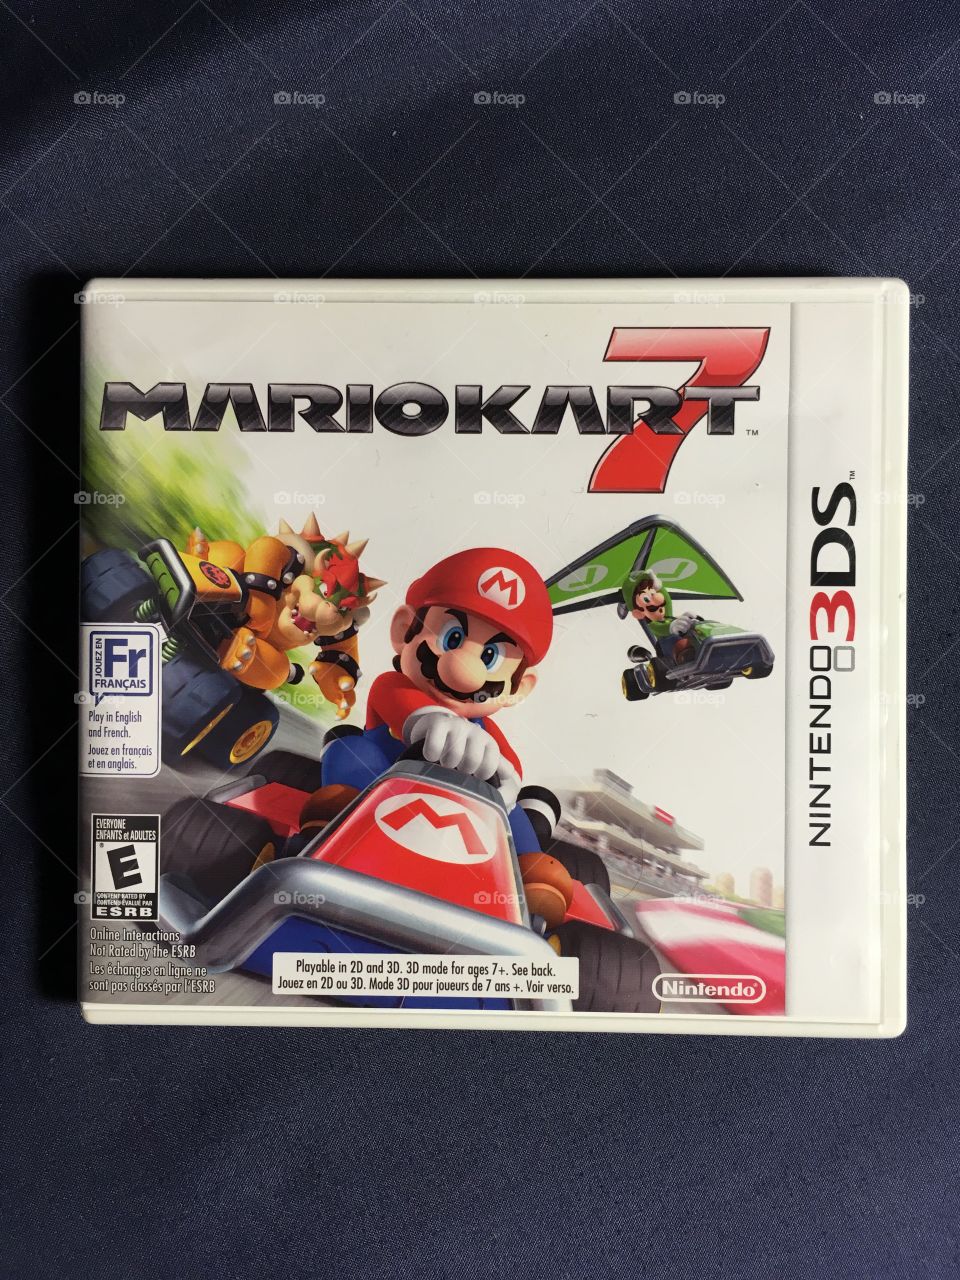 Mariokart 7 for the Nintendo 3DS - released 2011